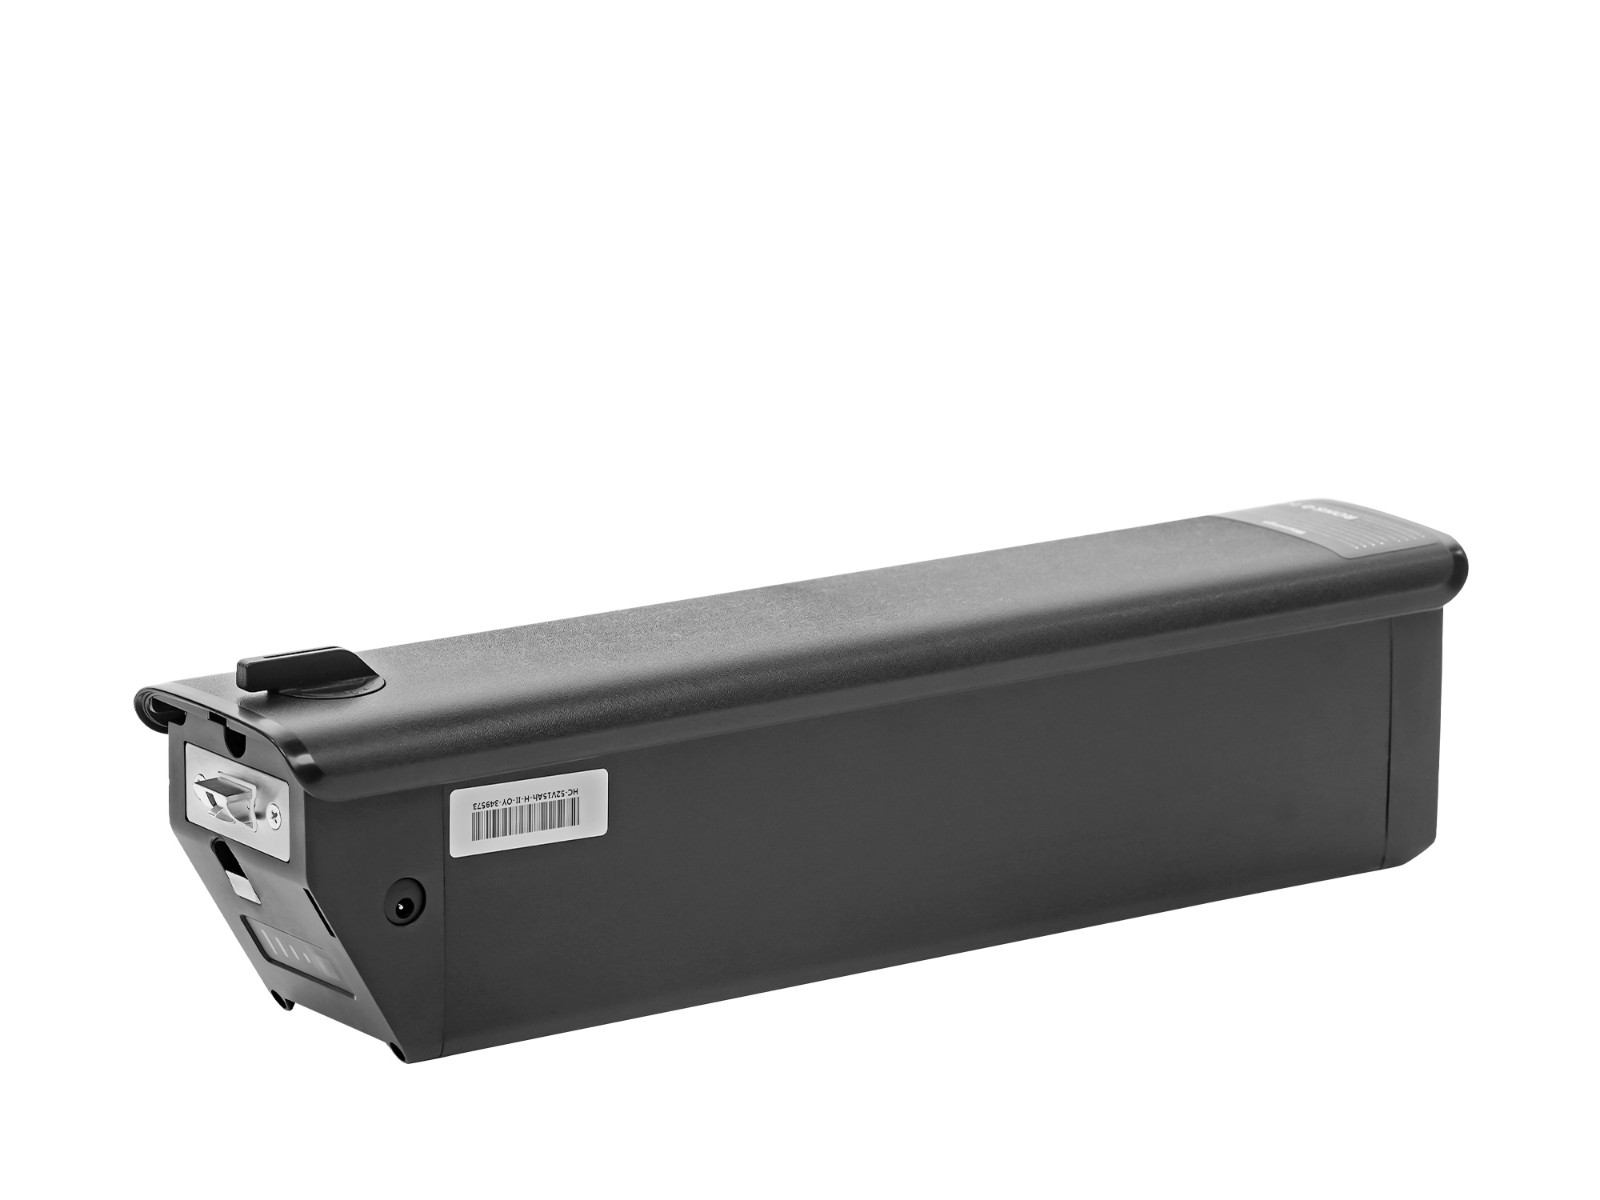 Magicycle Ocelot/Ocelot Pro Ebike 52V 20Ah  Battery